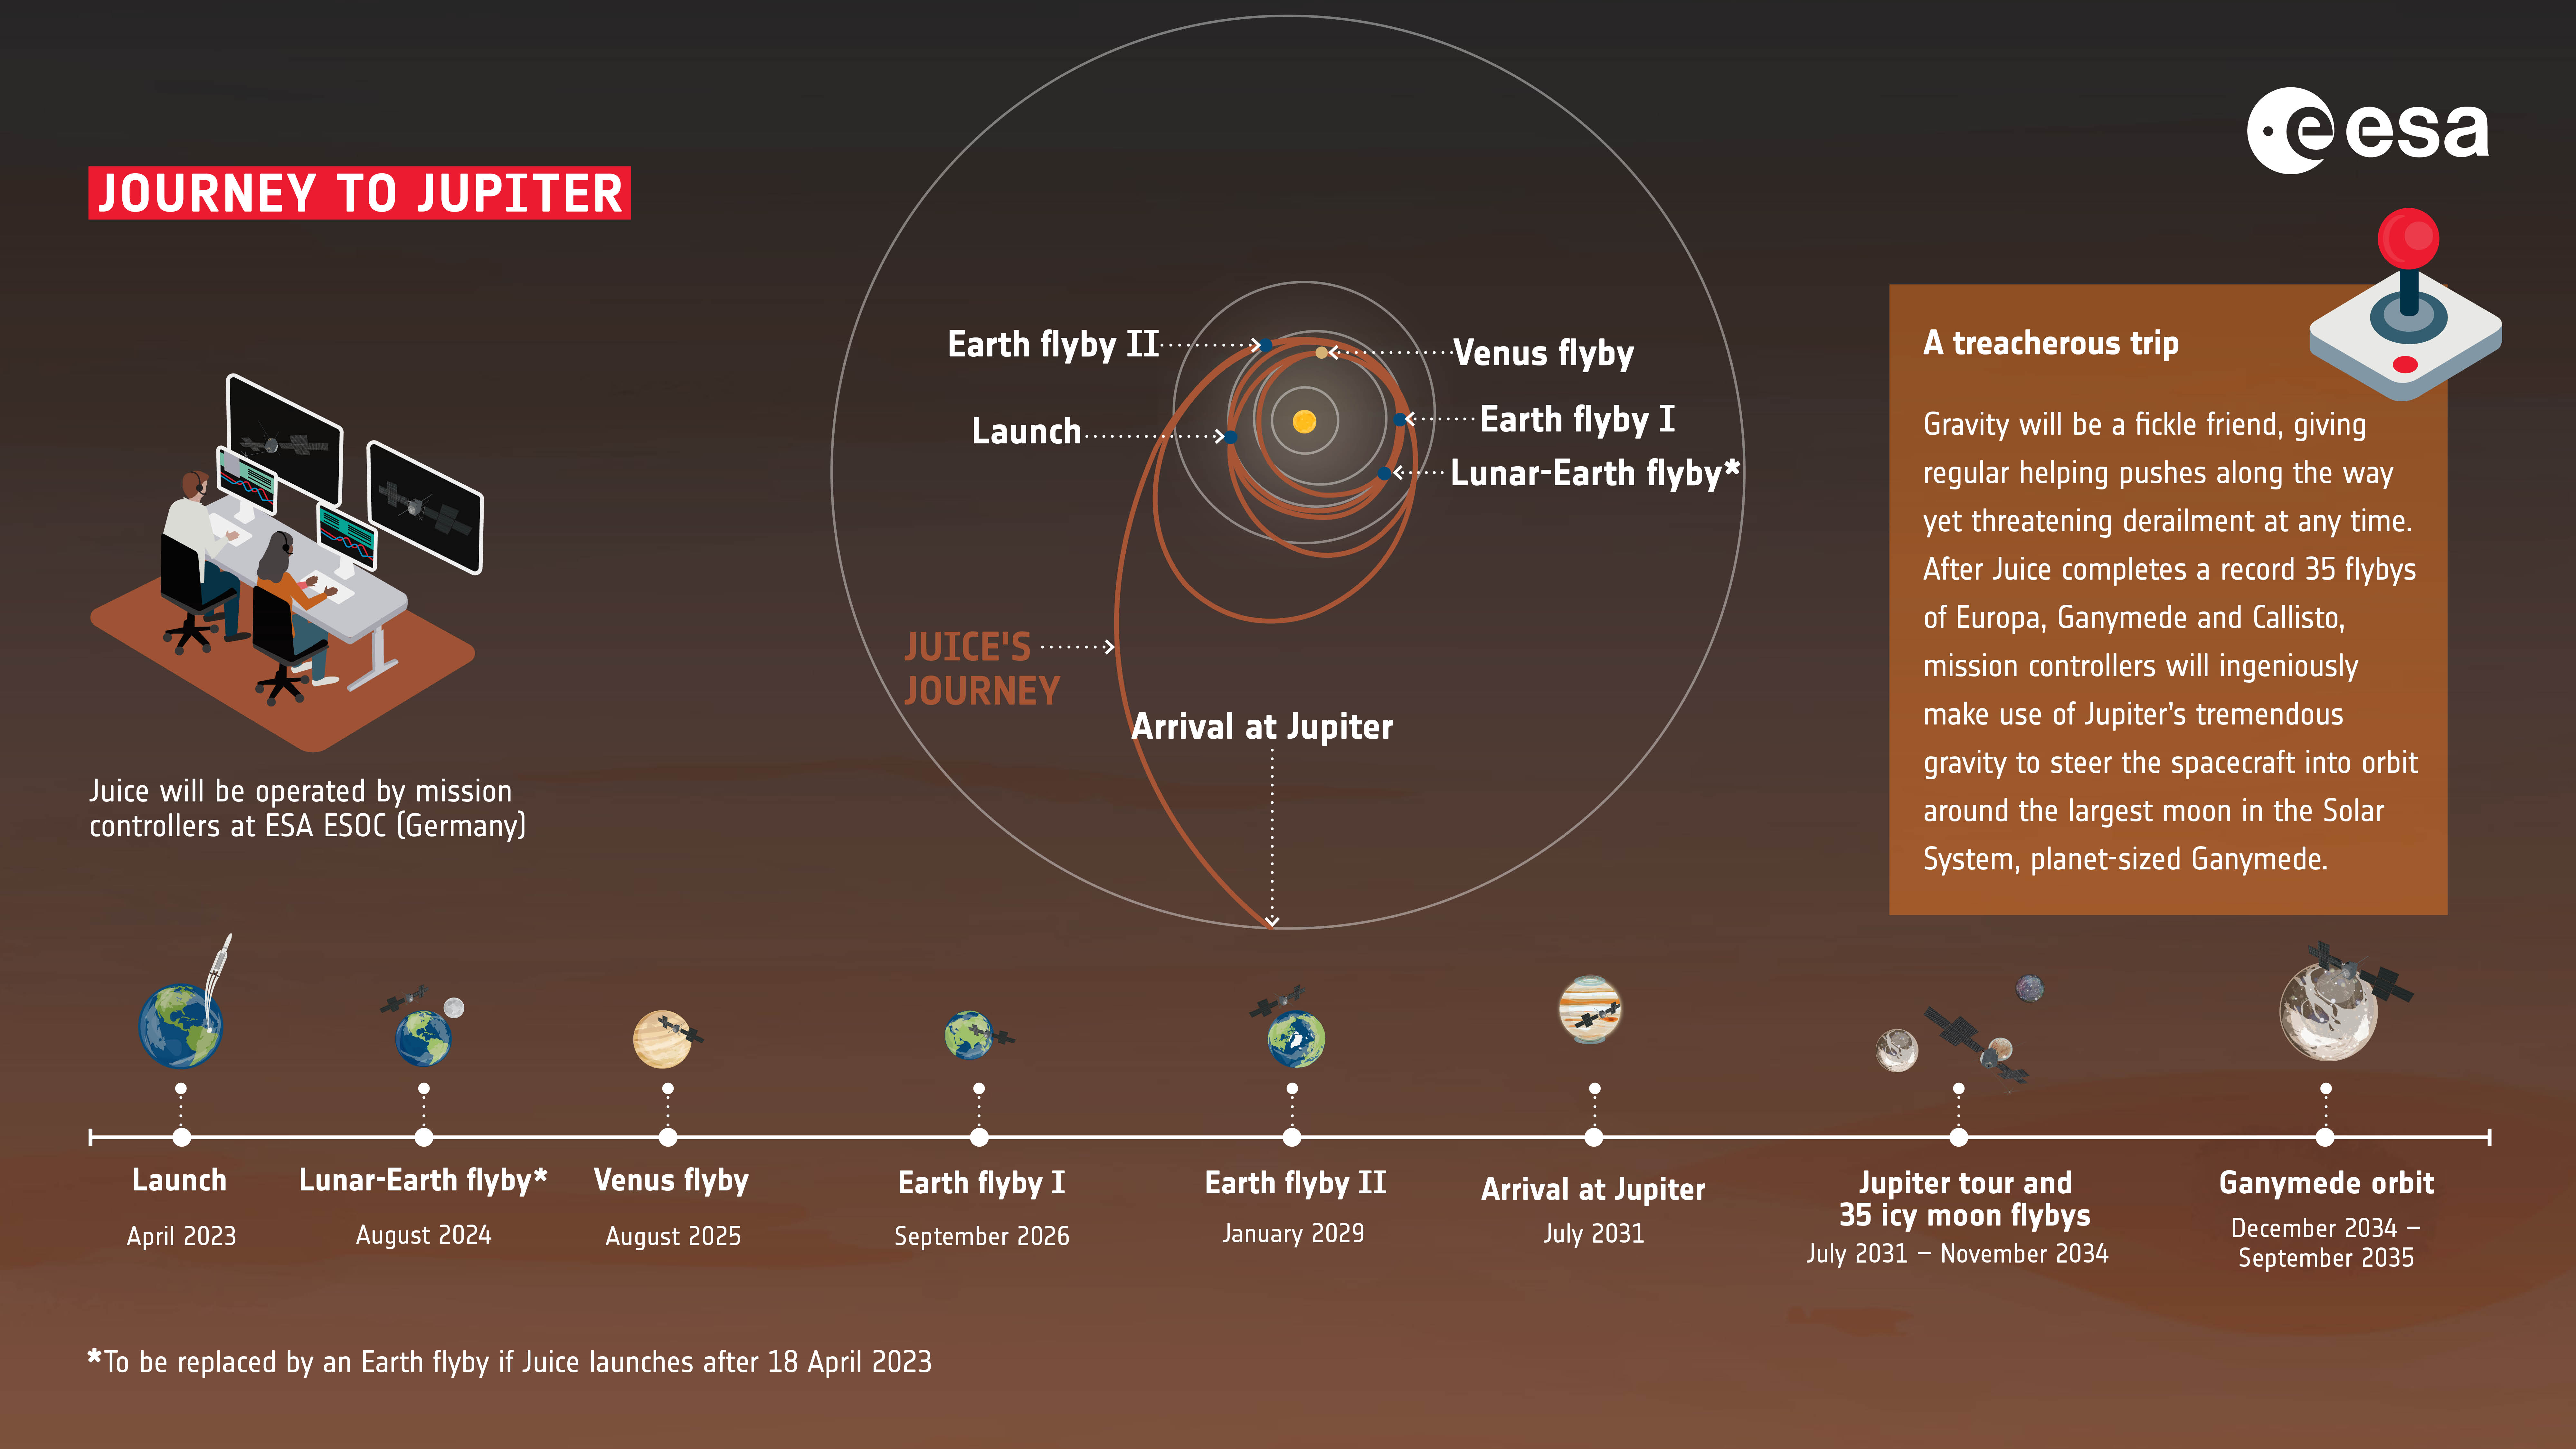 Une chronologie de la mission JUICE, y compris son voyage vers Jupiter.